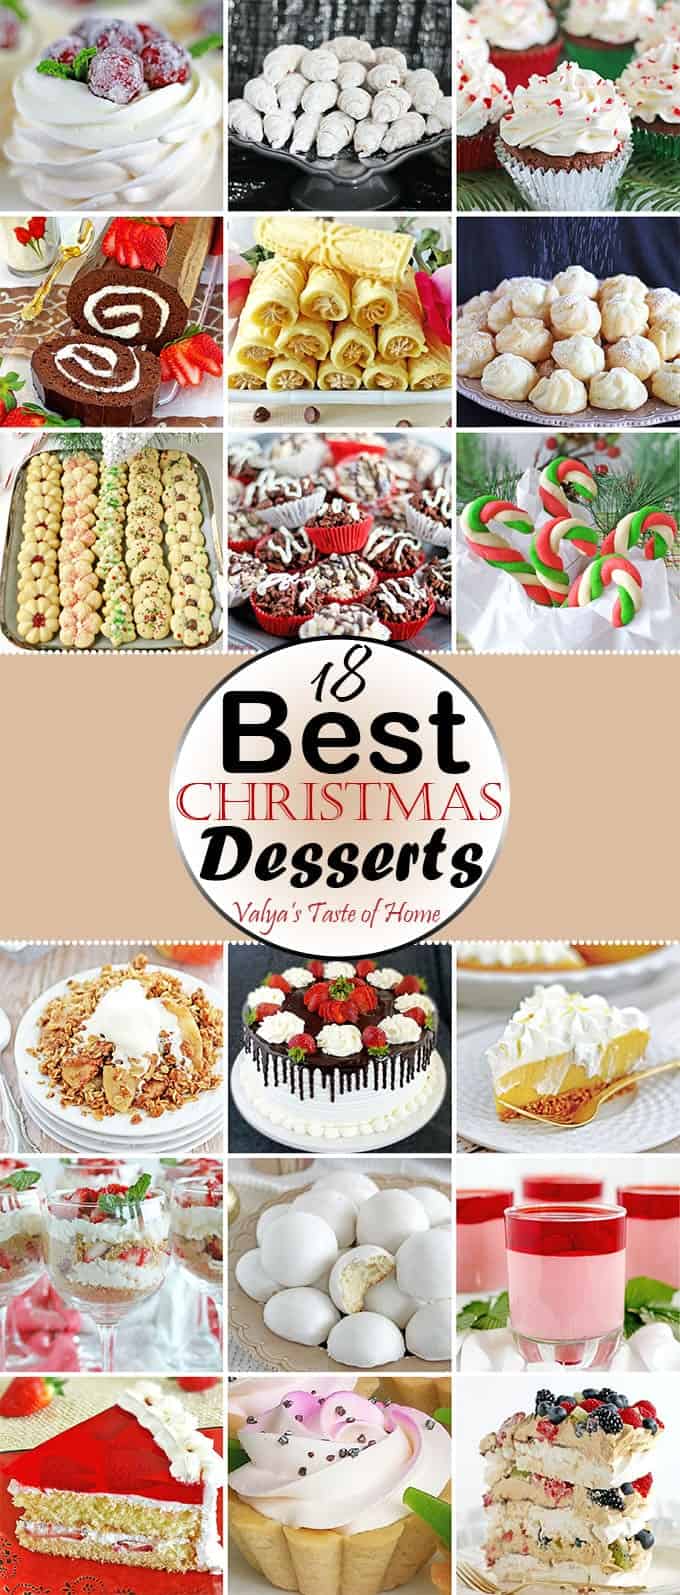 18 Best Christmas Desserts